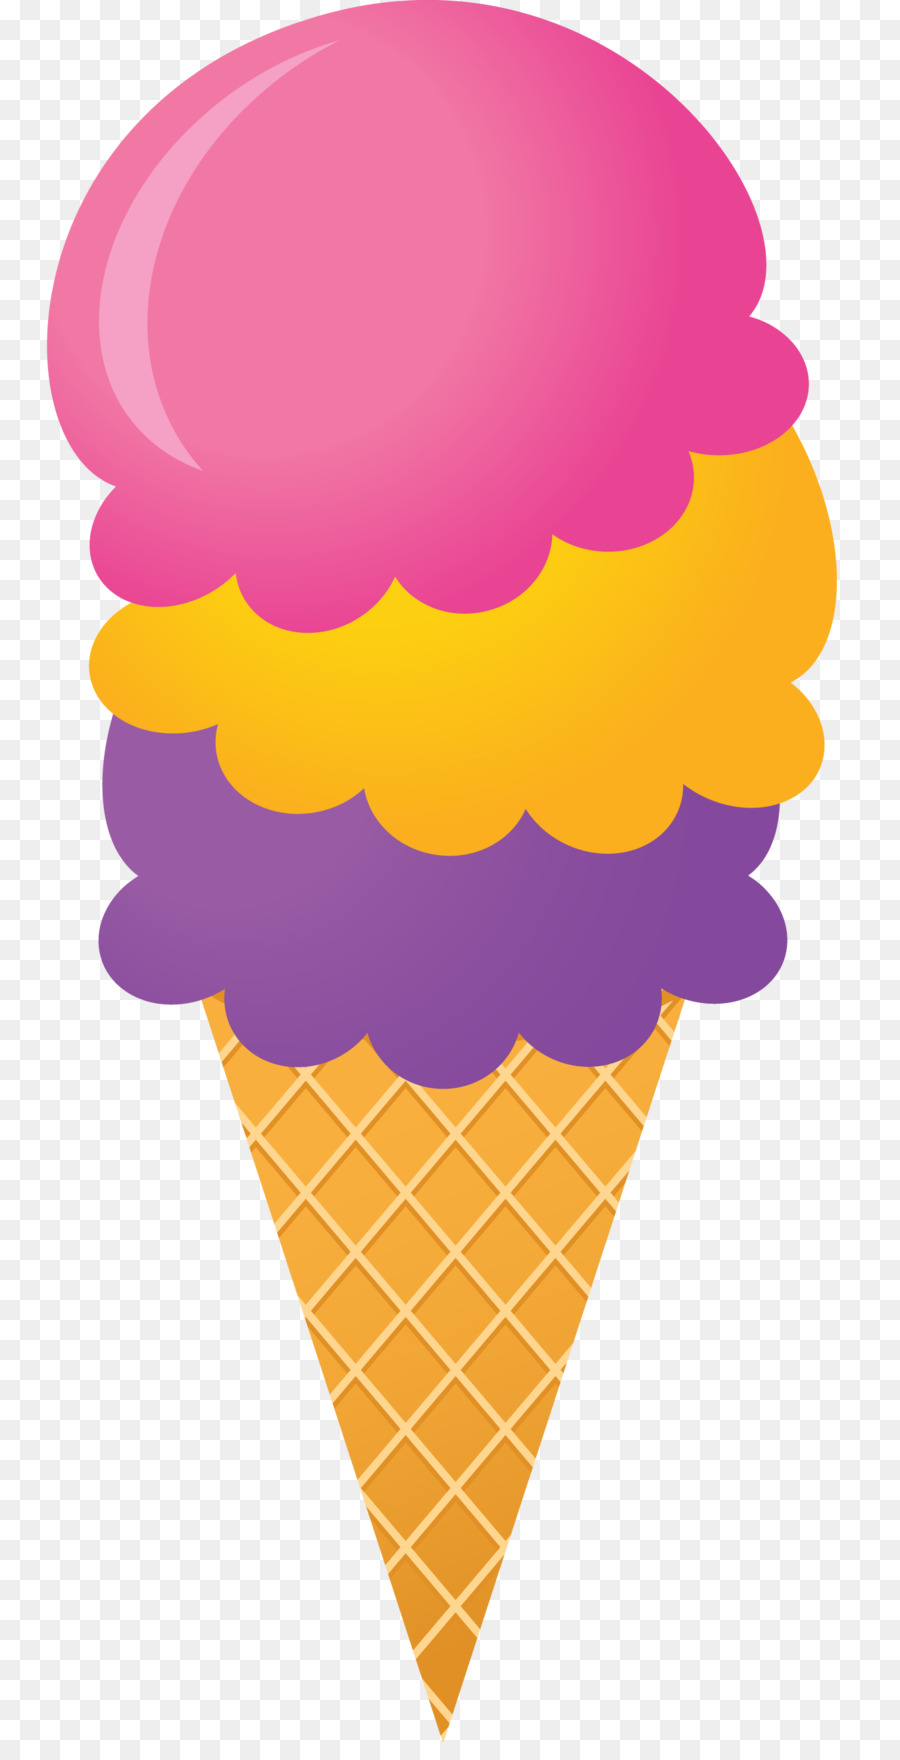 Ice Cream Cone Background.